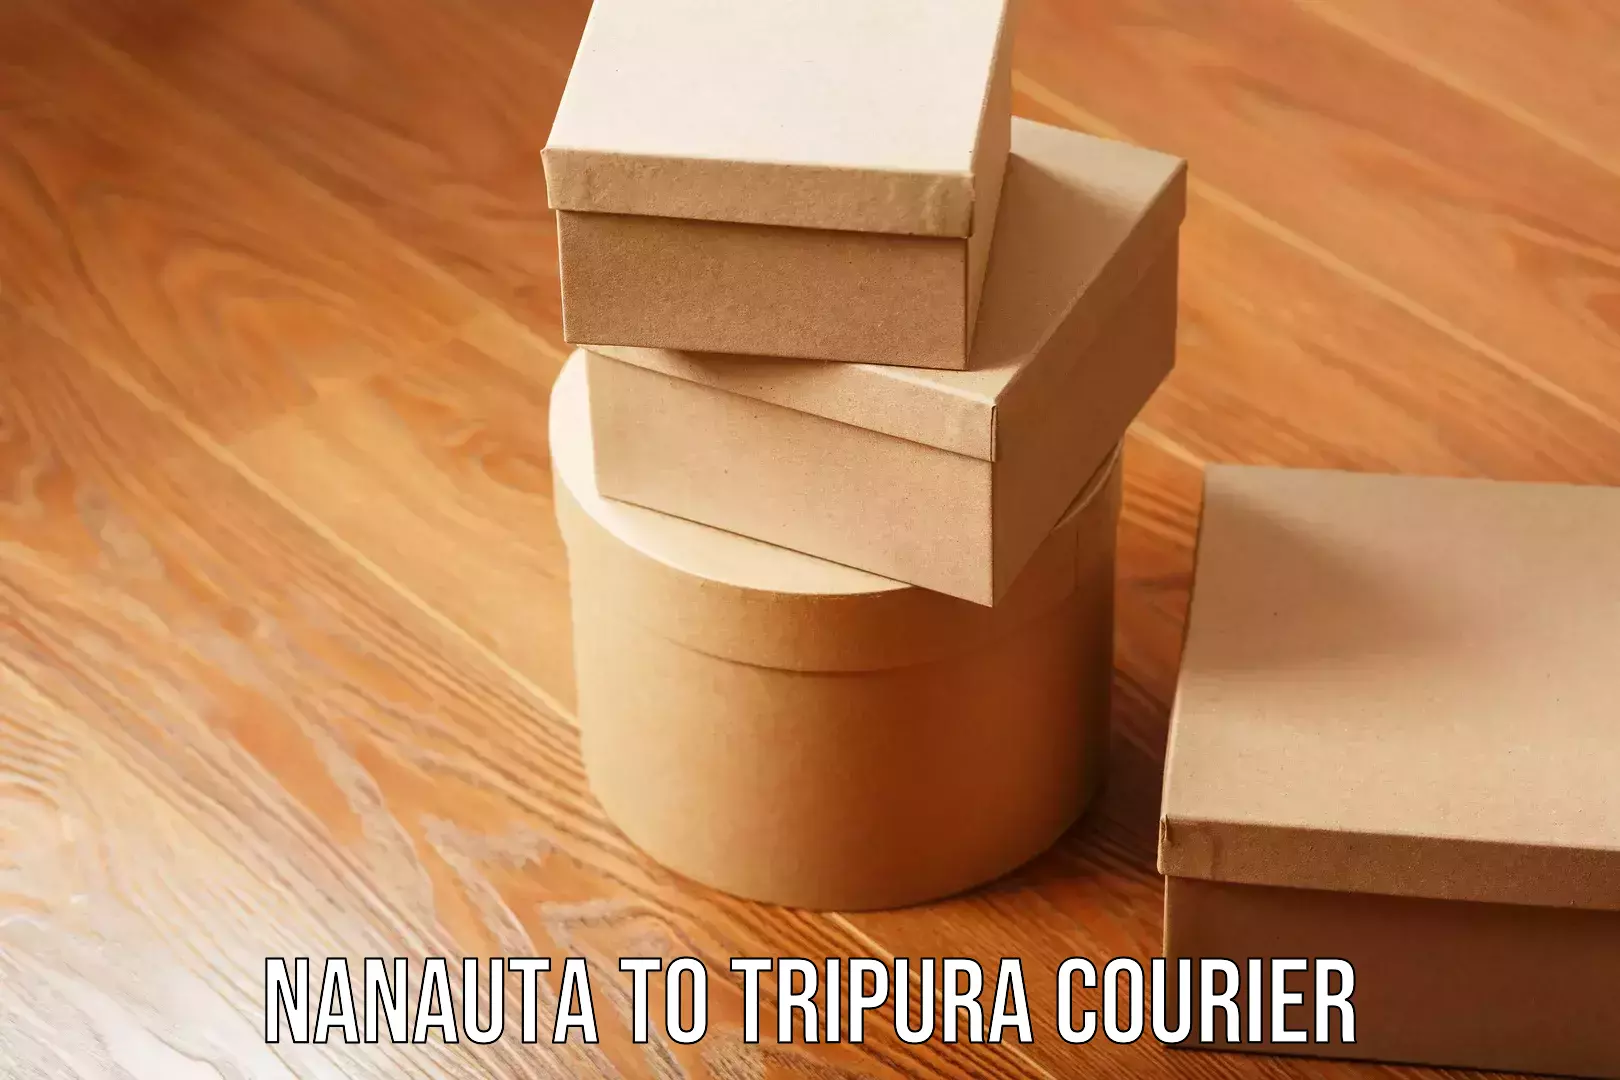 Moving and packing experts Nanauta to Tripura